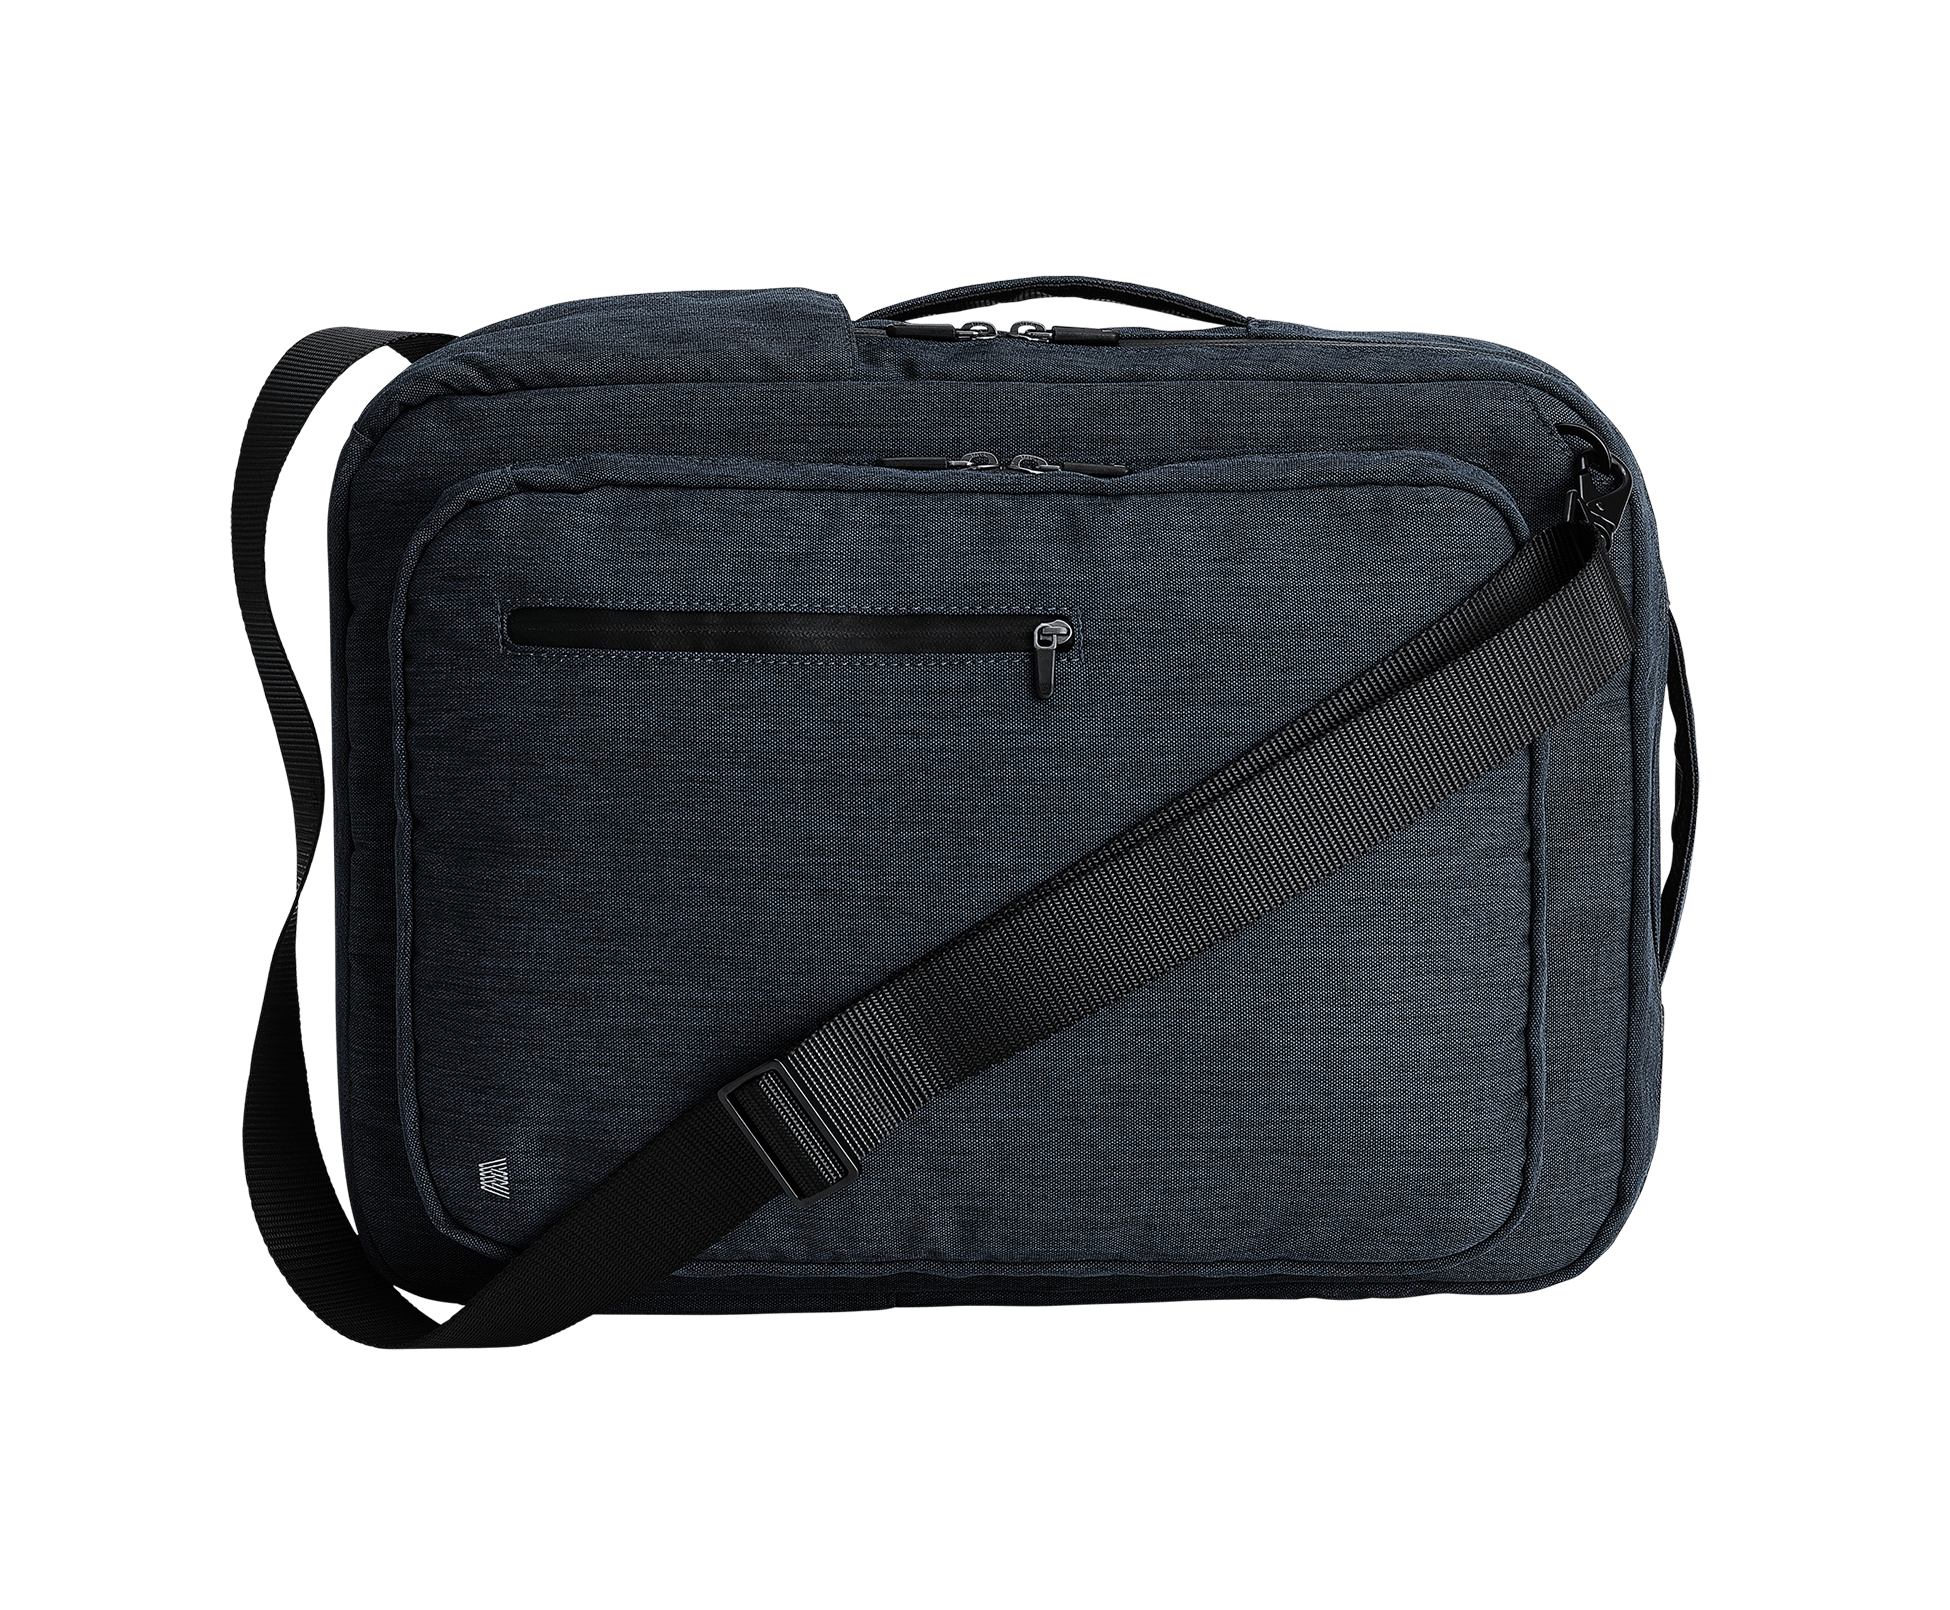 underonesky convertible backpack